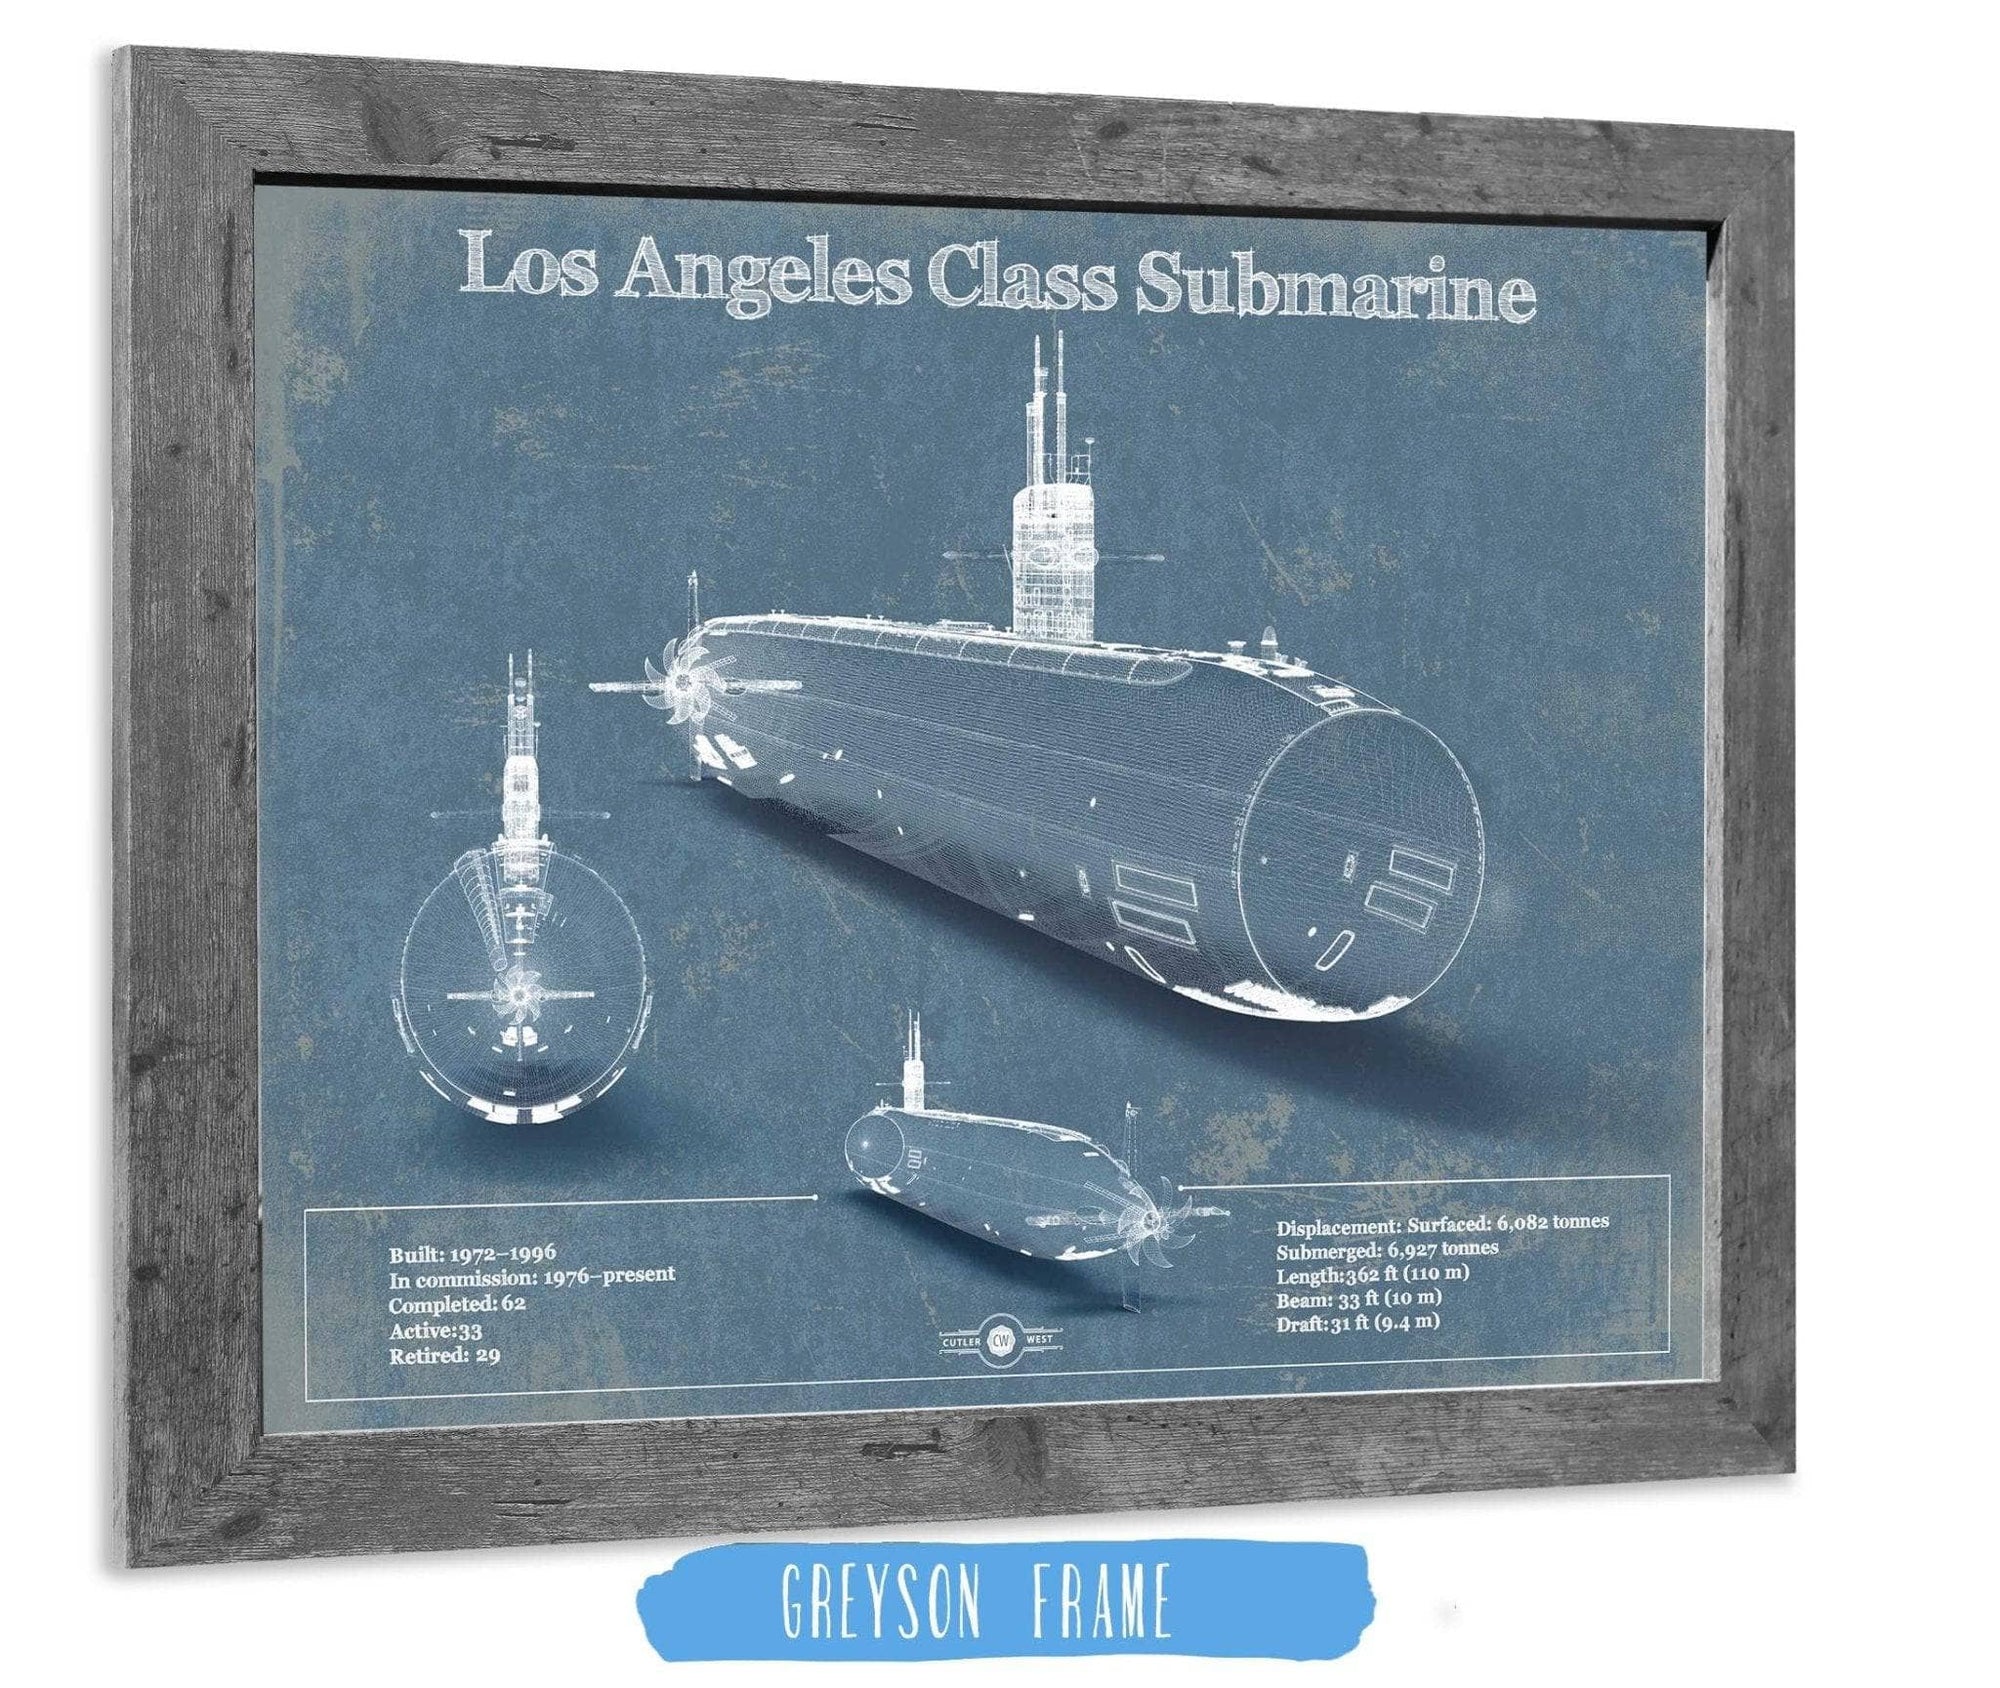 Cutler West Naval Military 14" x 11" / Greyson Frame Los Angeles-class submarine Blueprint Patent Original Art 845000153_65309